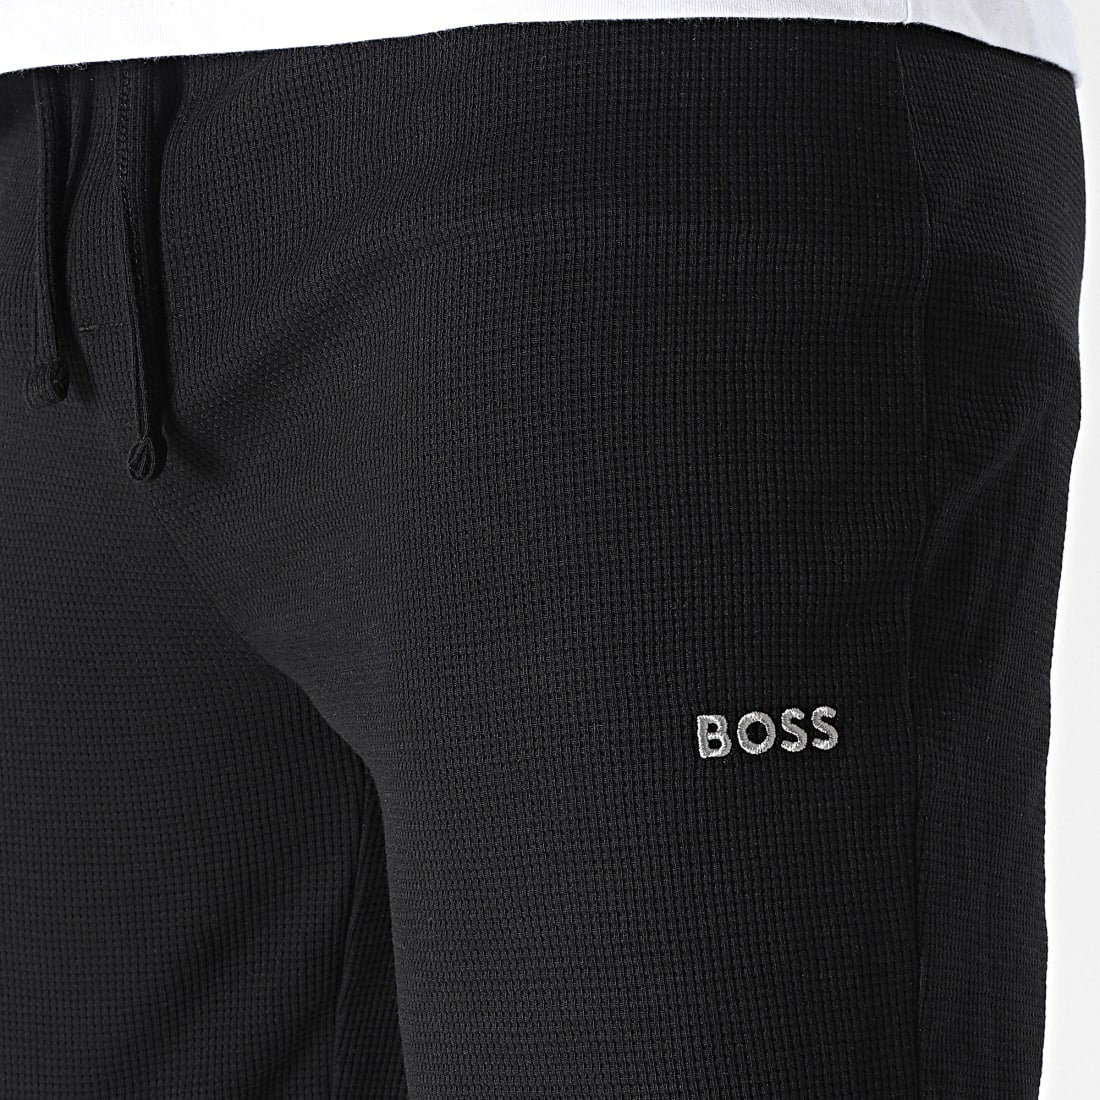 Boss Loungewear Men's Bottoms